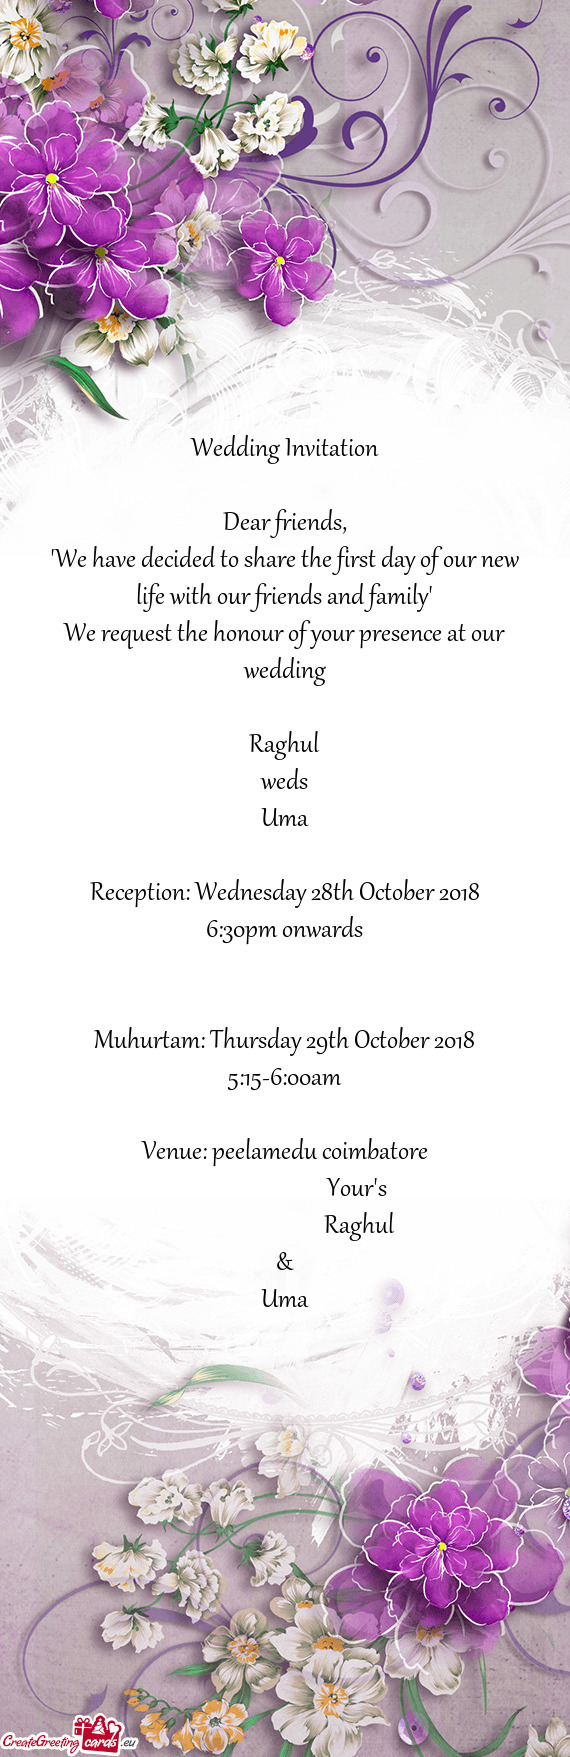 Reception: Wednesday 28th October 2018